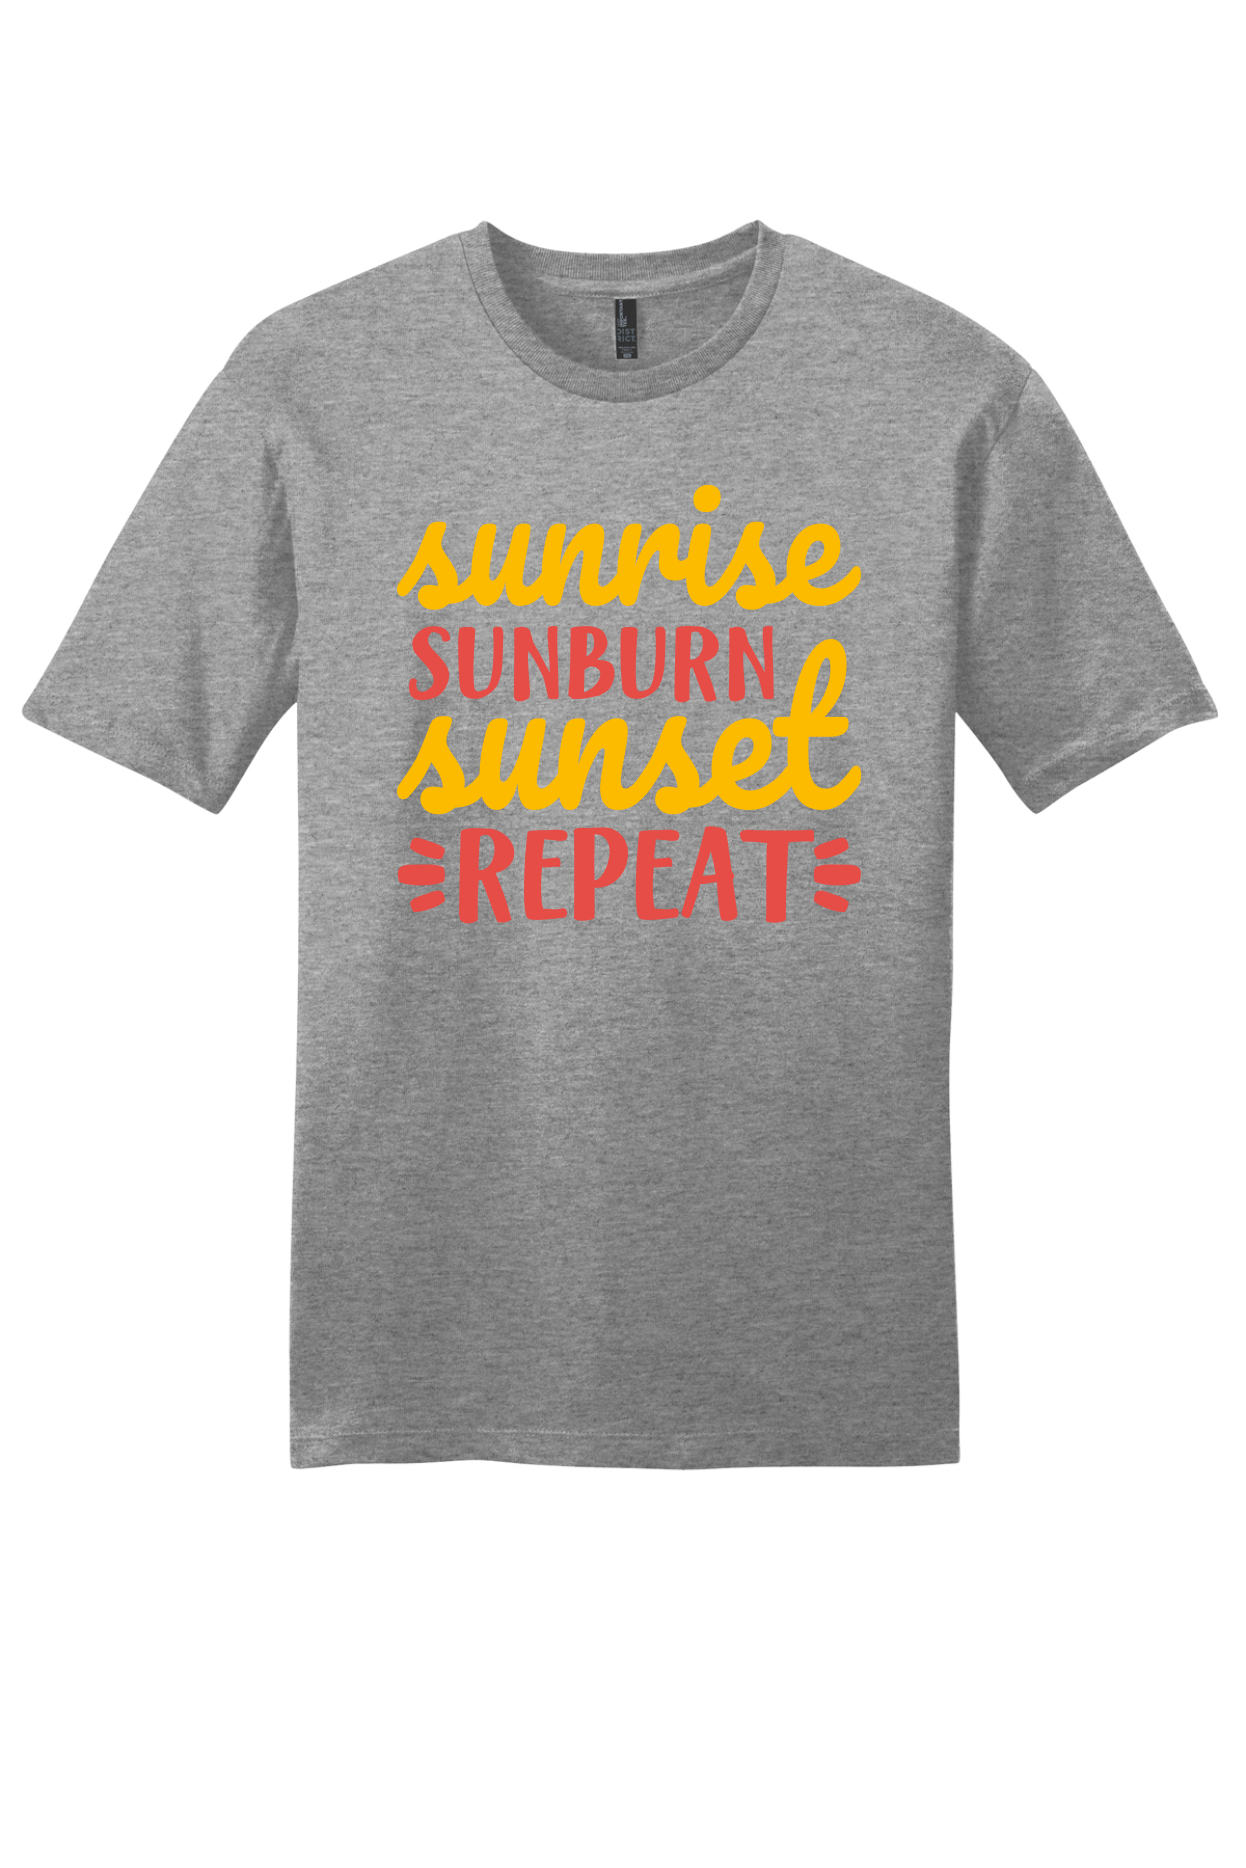 Sunrise, Sunburn, Sunset Repeat Short Sleeve T-shirt